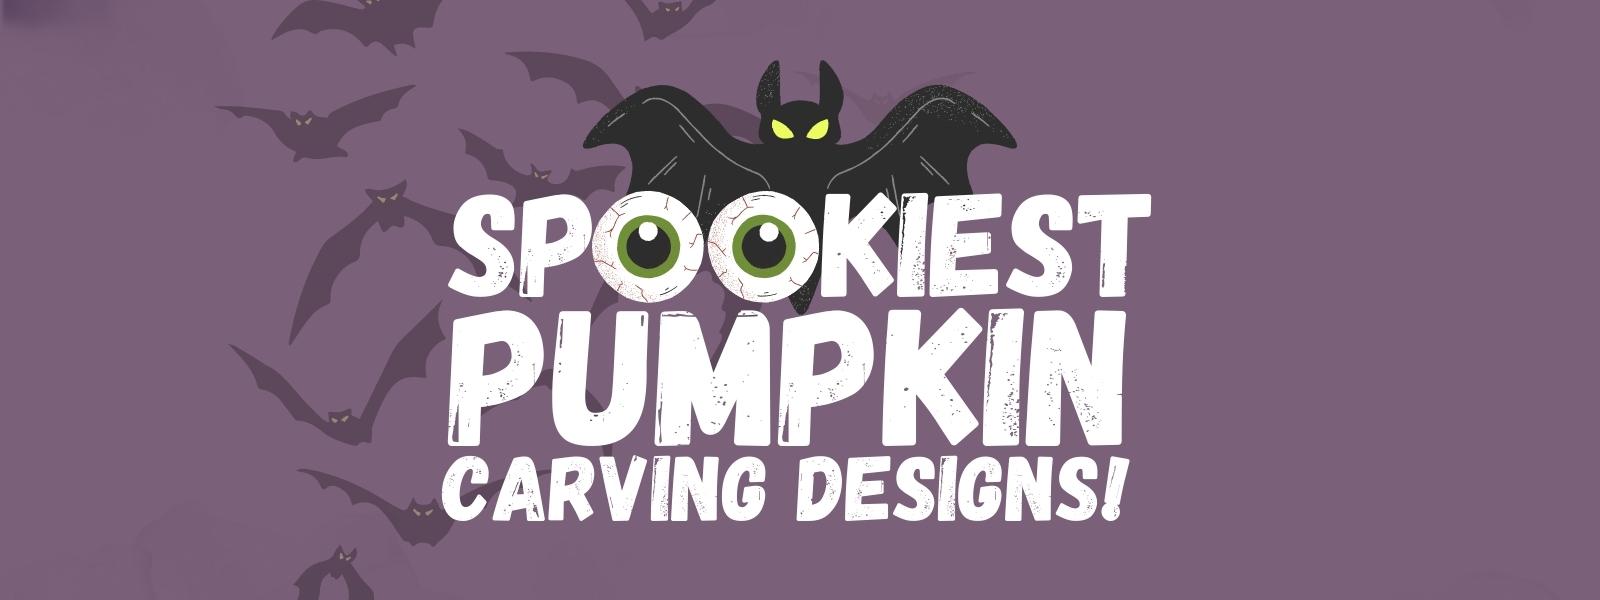 Spookiest Pumpkin Carving Ideas 1